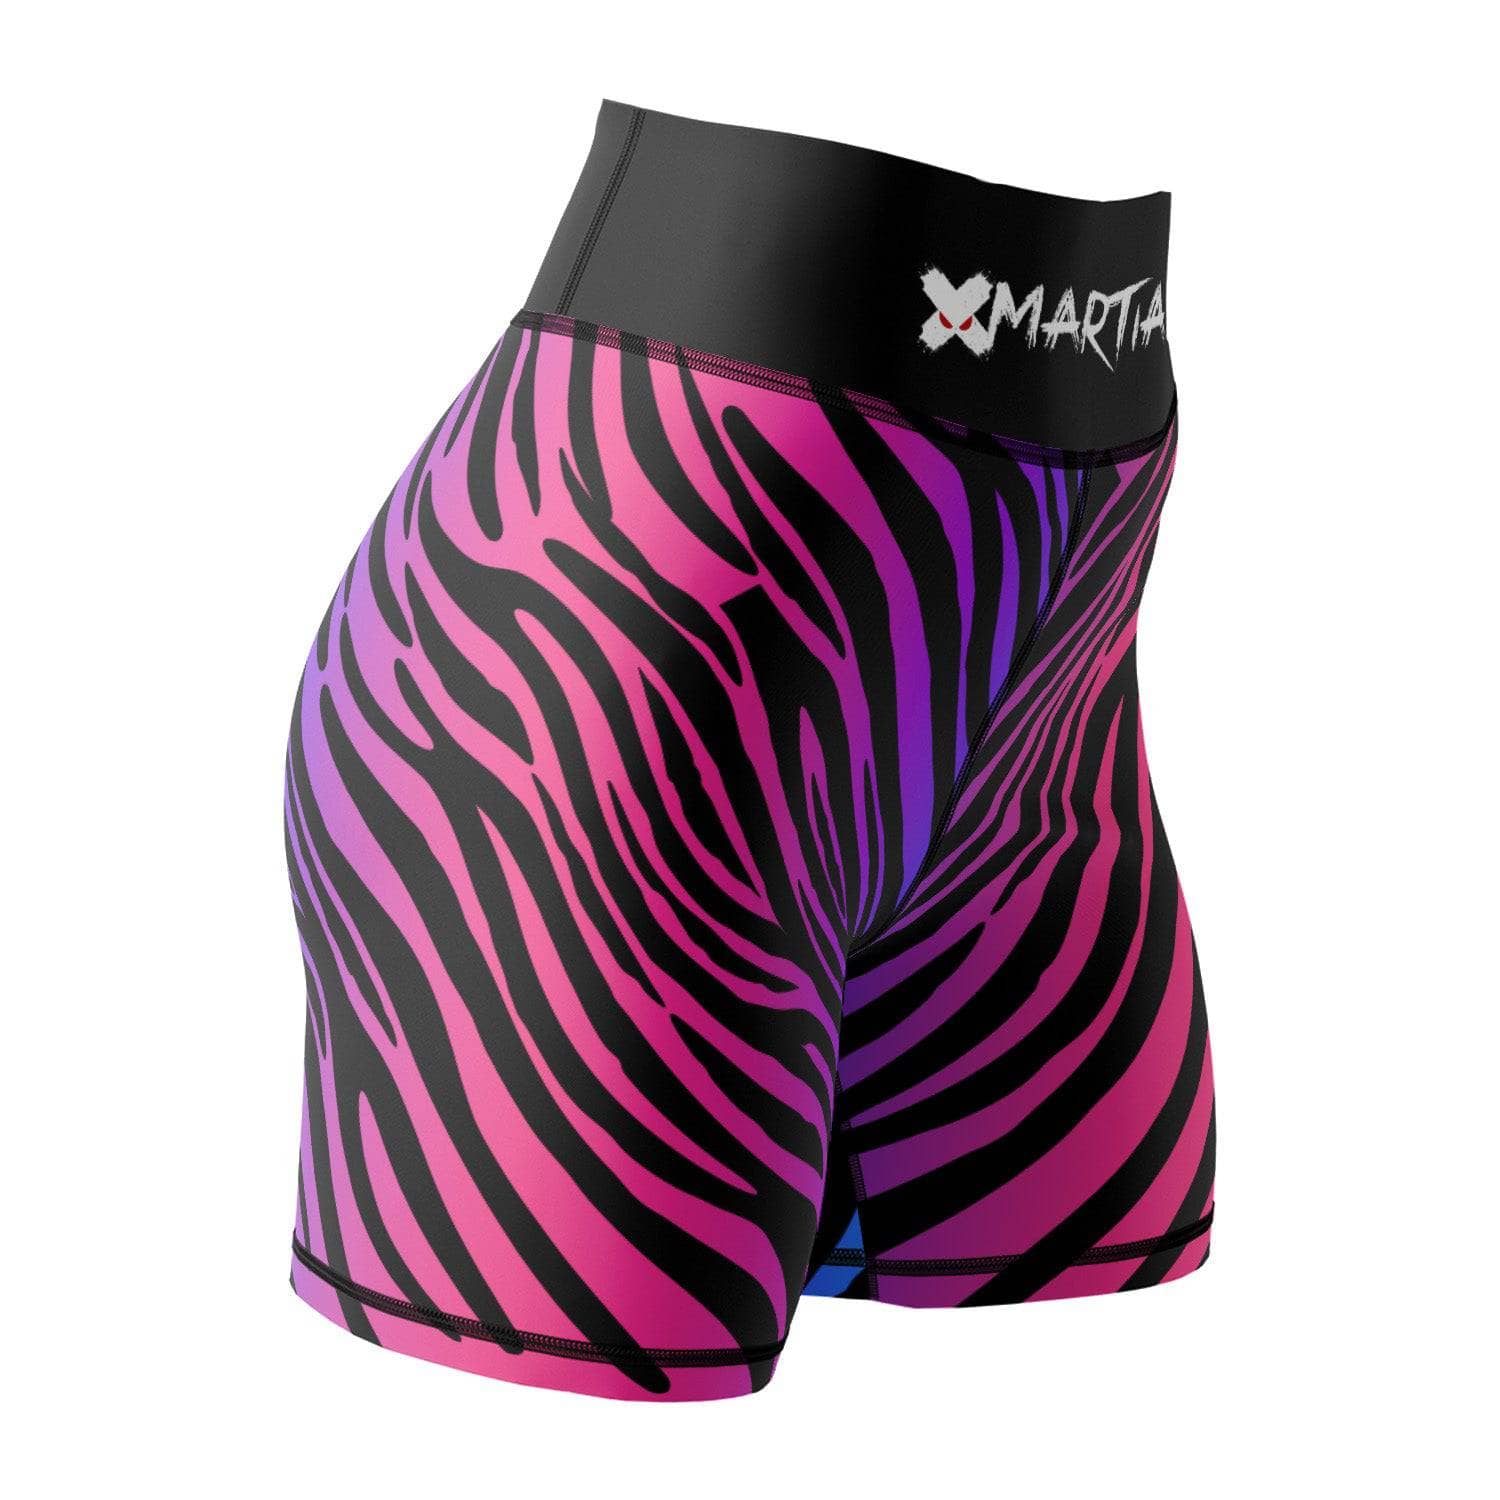 Acid Zebra Women's BJJ/MMA Compression Shorts XMARTIAL